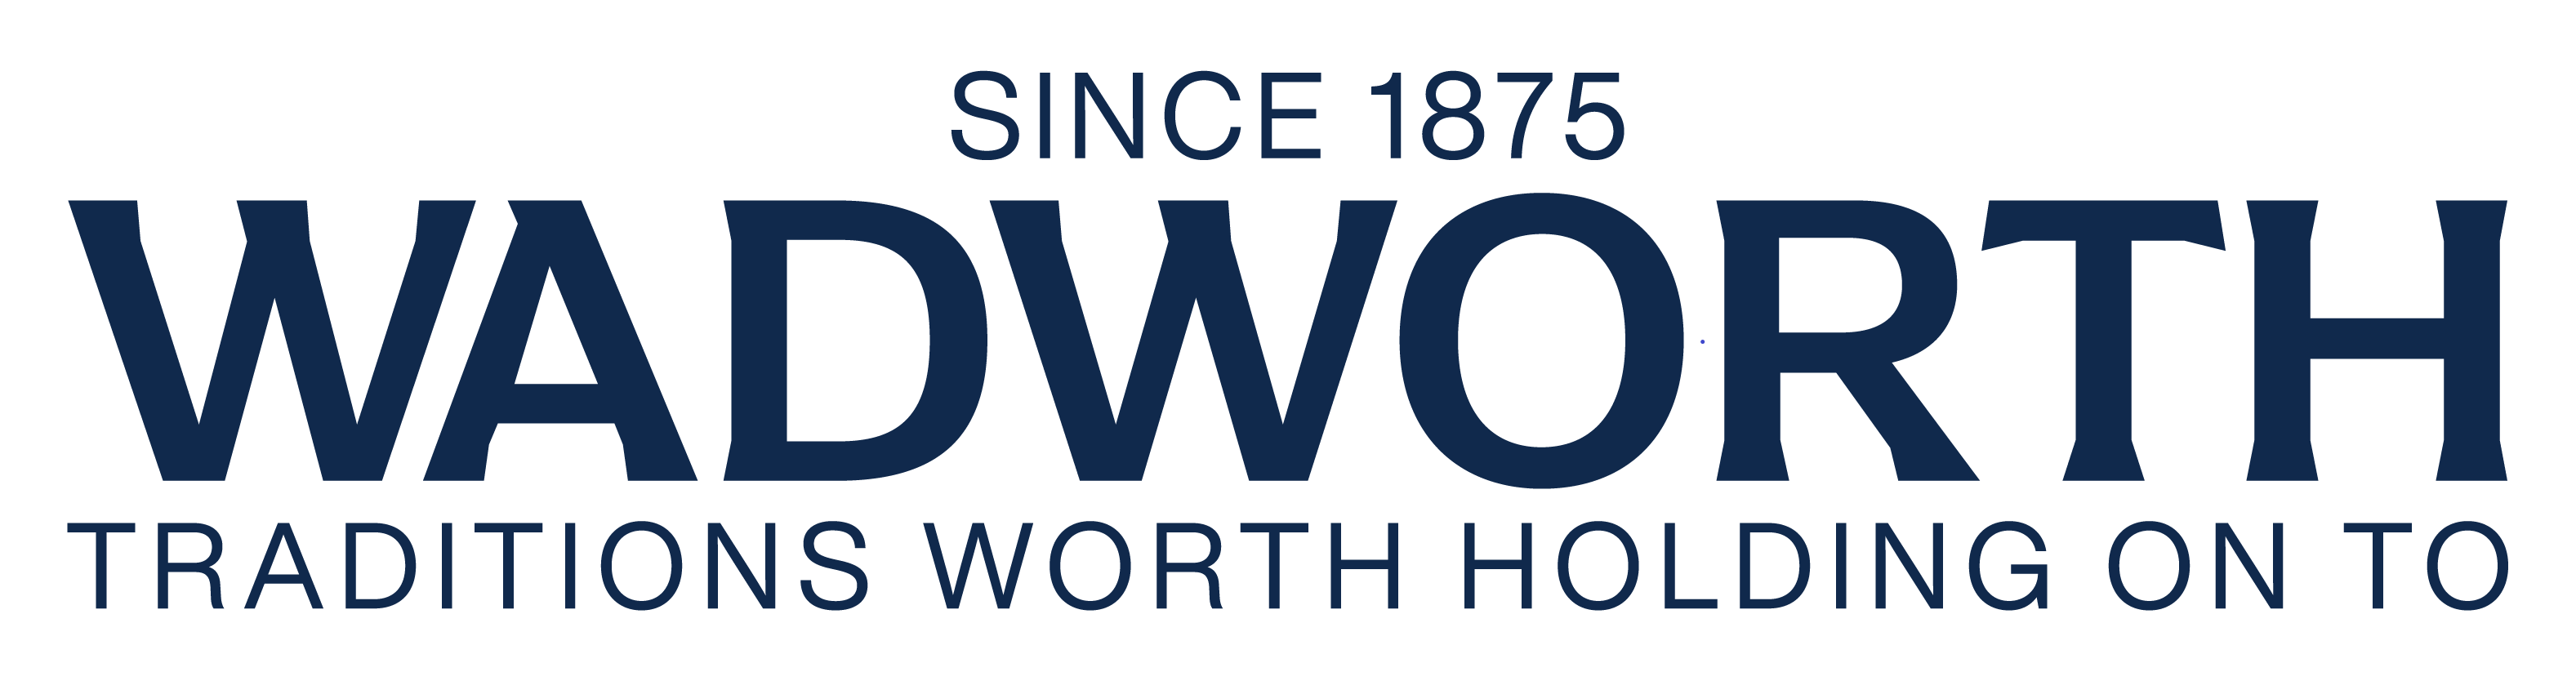 Wadworth & Co Ltd - Ordinary Shares